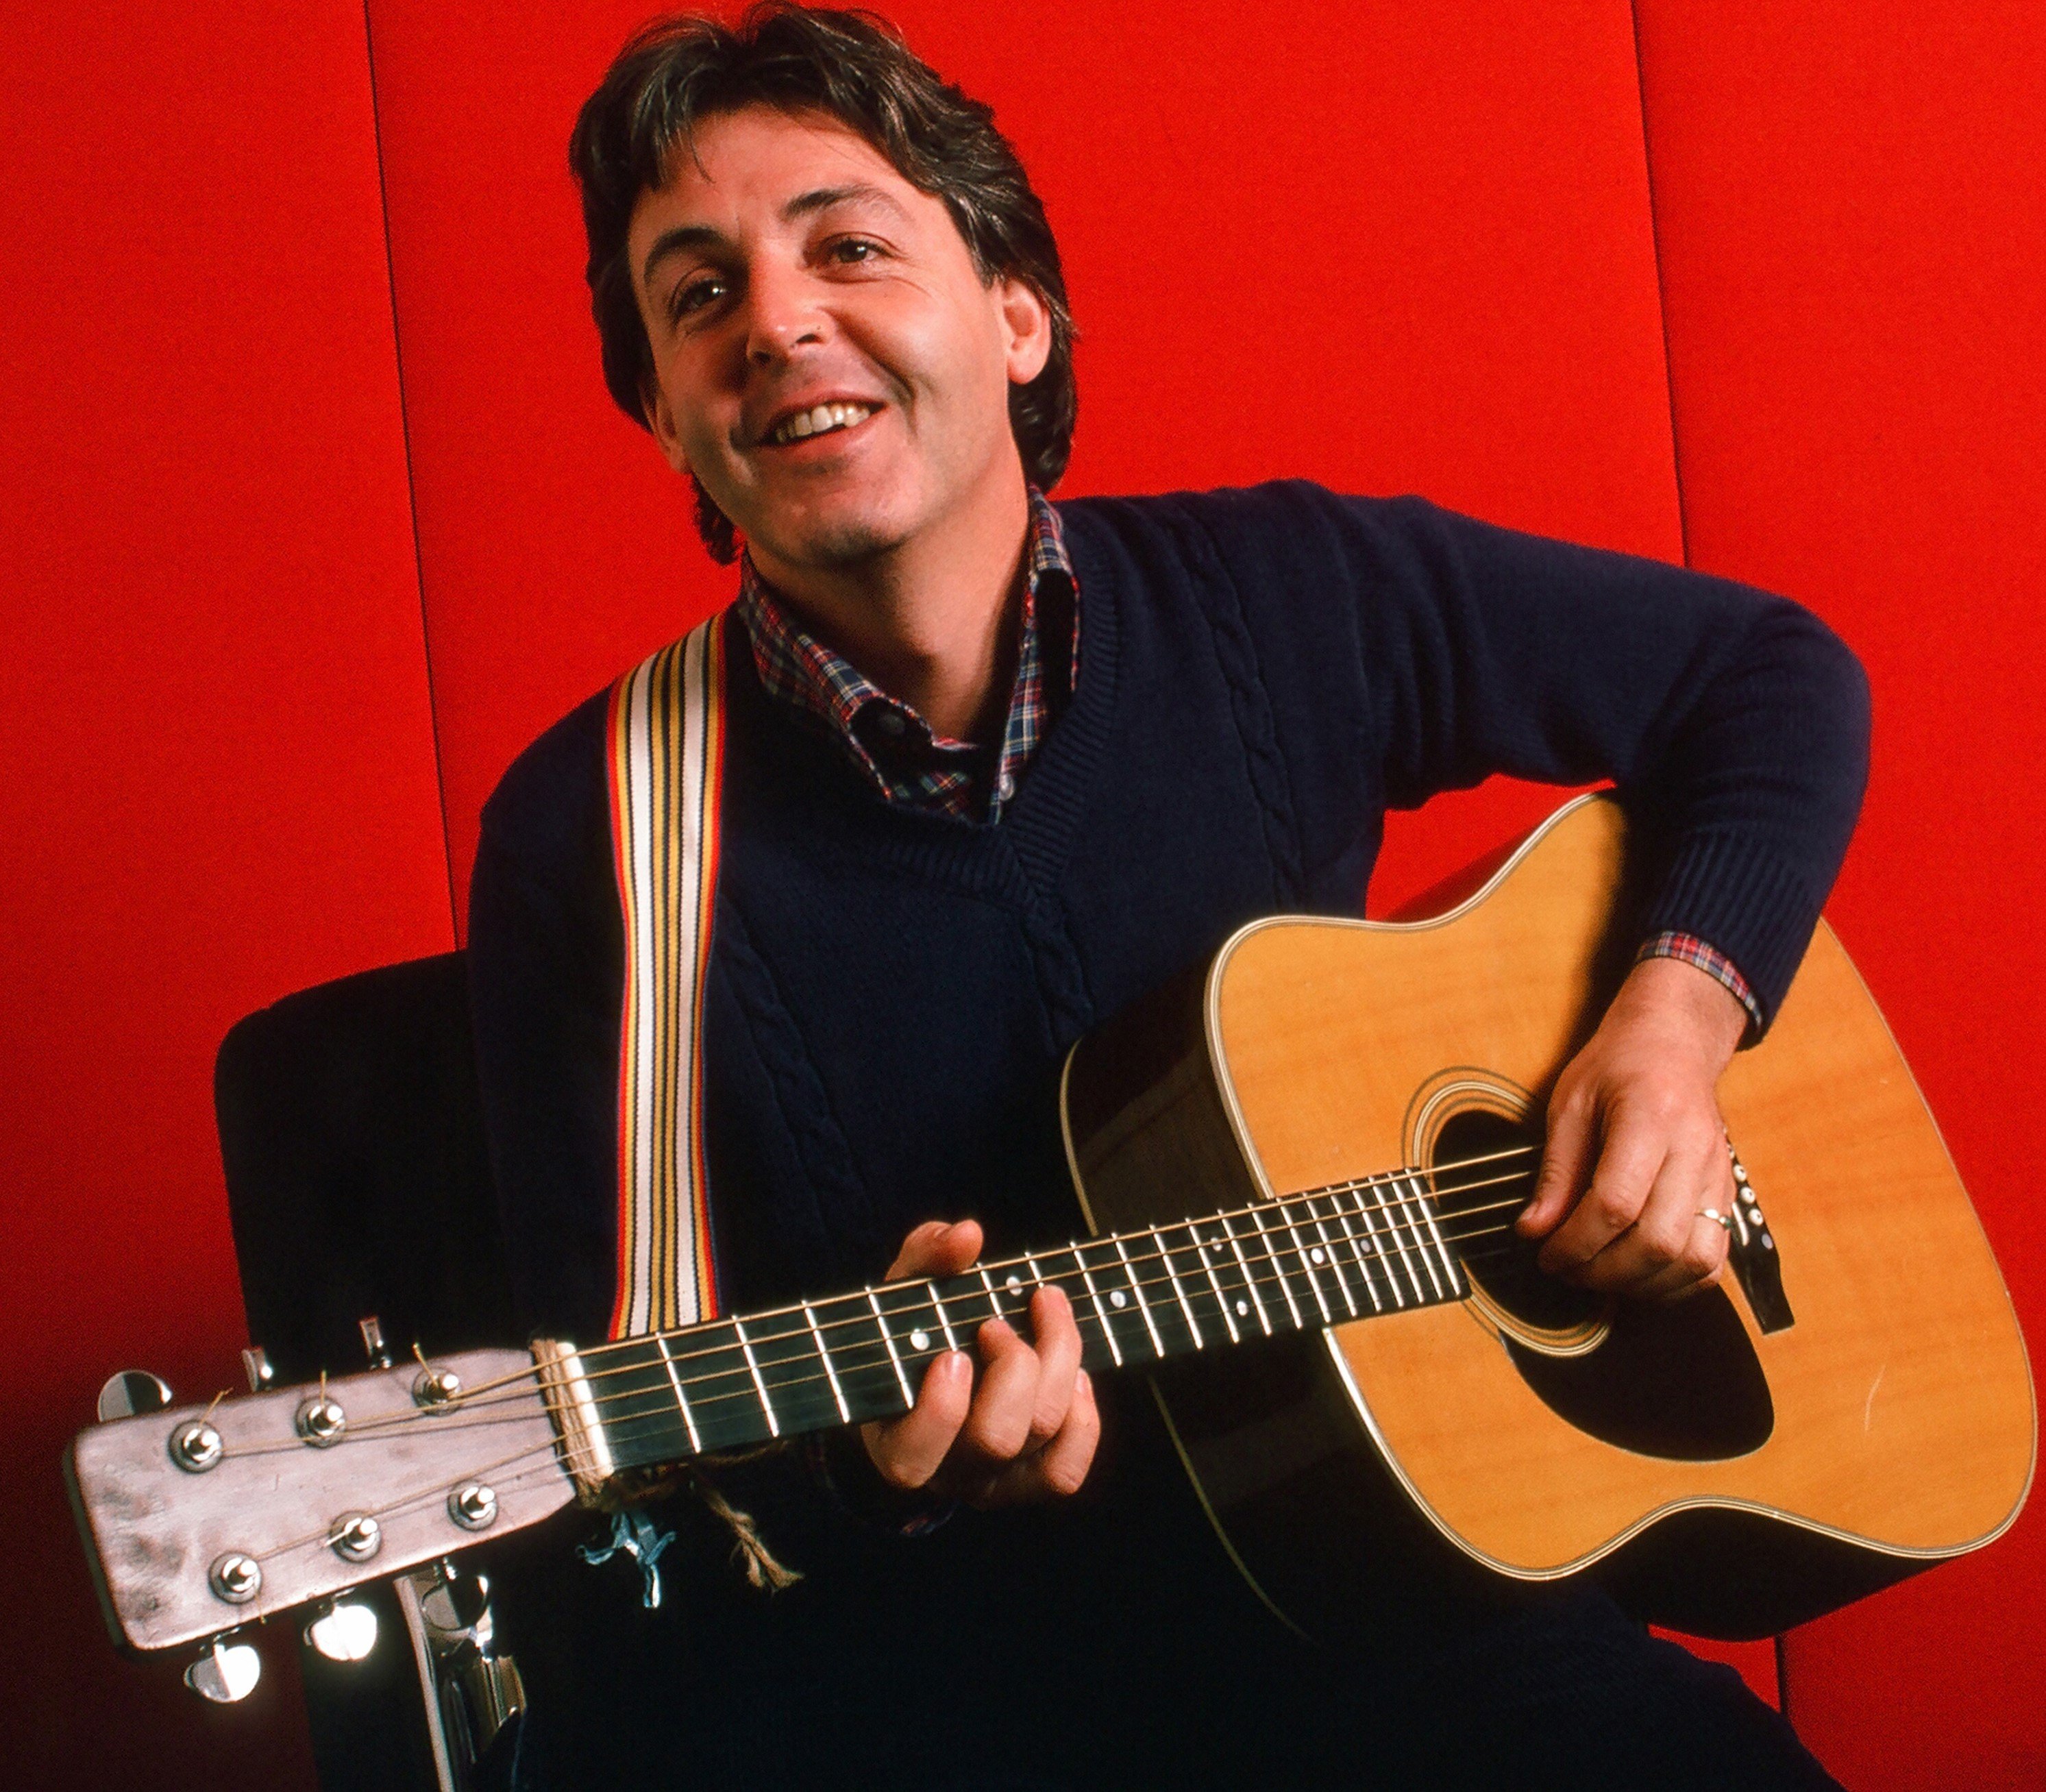 Paul McCartney with a guitar during the "Temporary Secretary" era